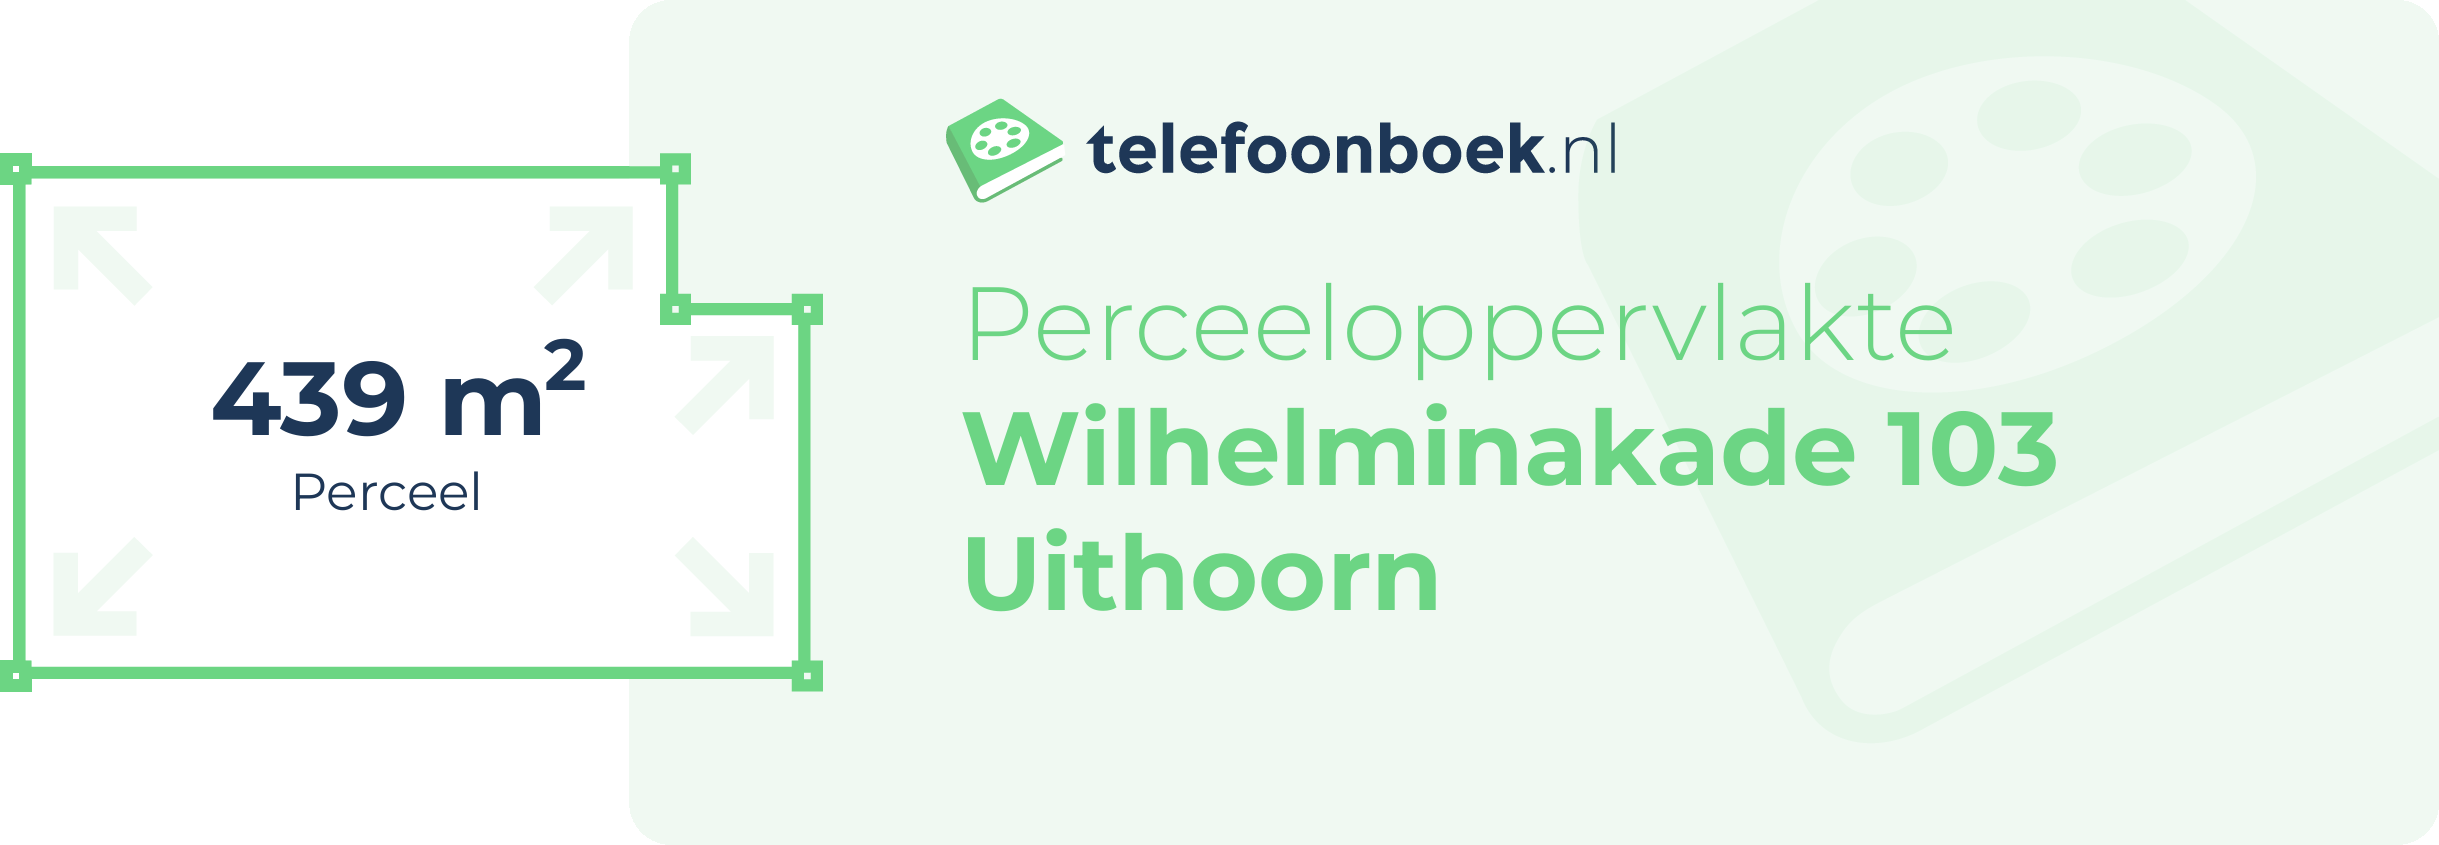 Perceeloppervlakte Wilhelminakade 103 Uithoorn